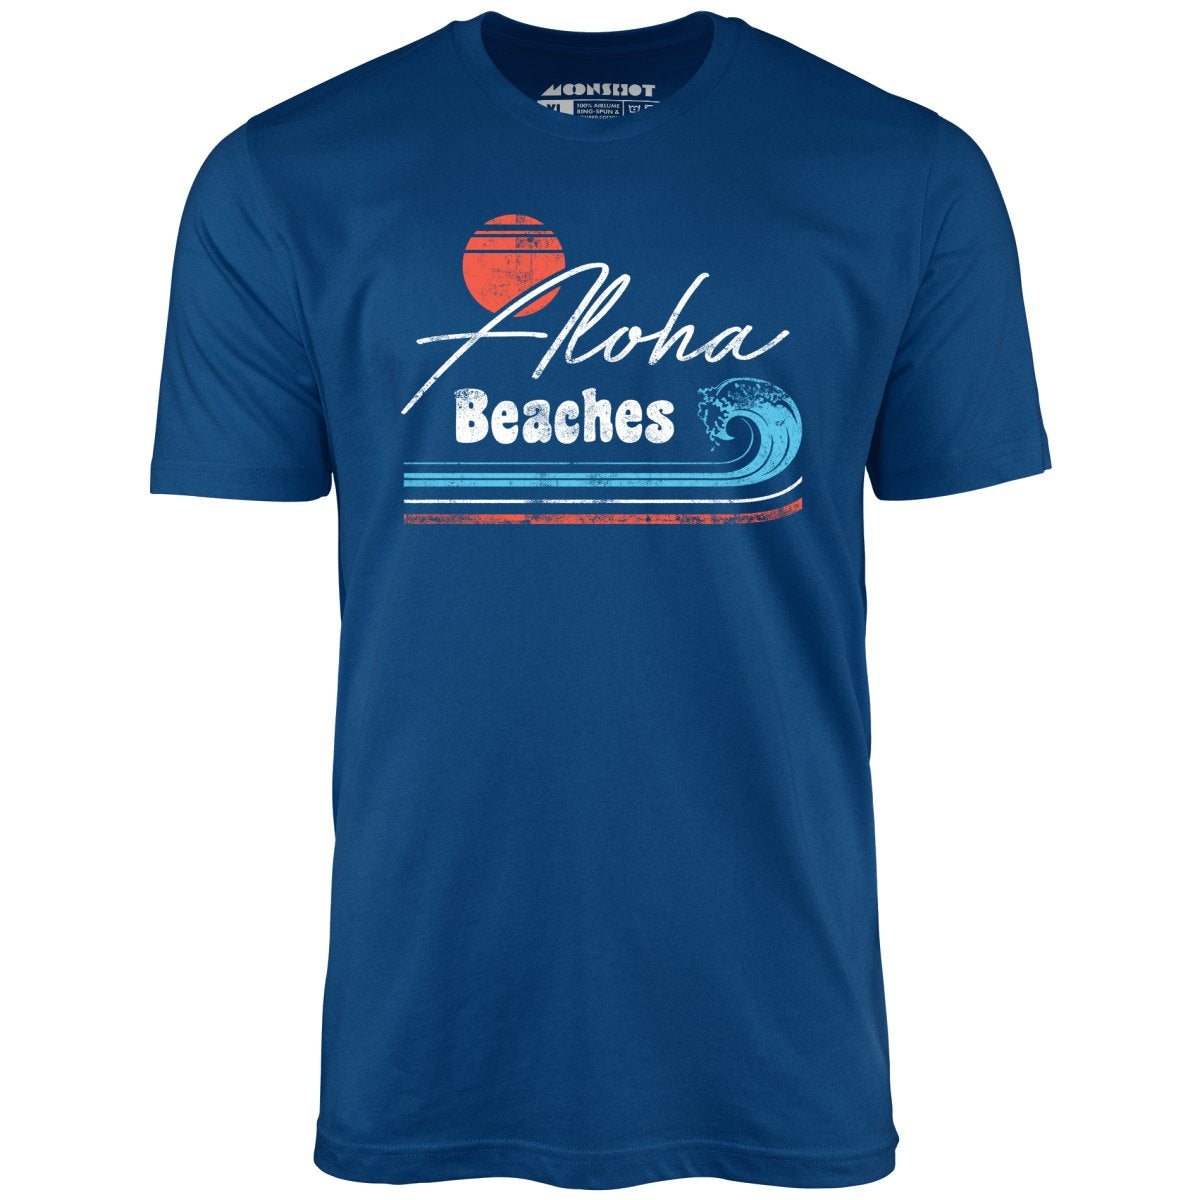 Aloha Beaches - Unisex T-Shirt